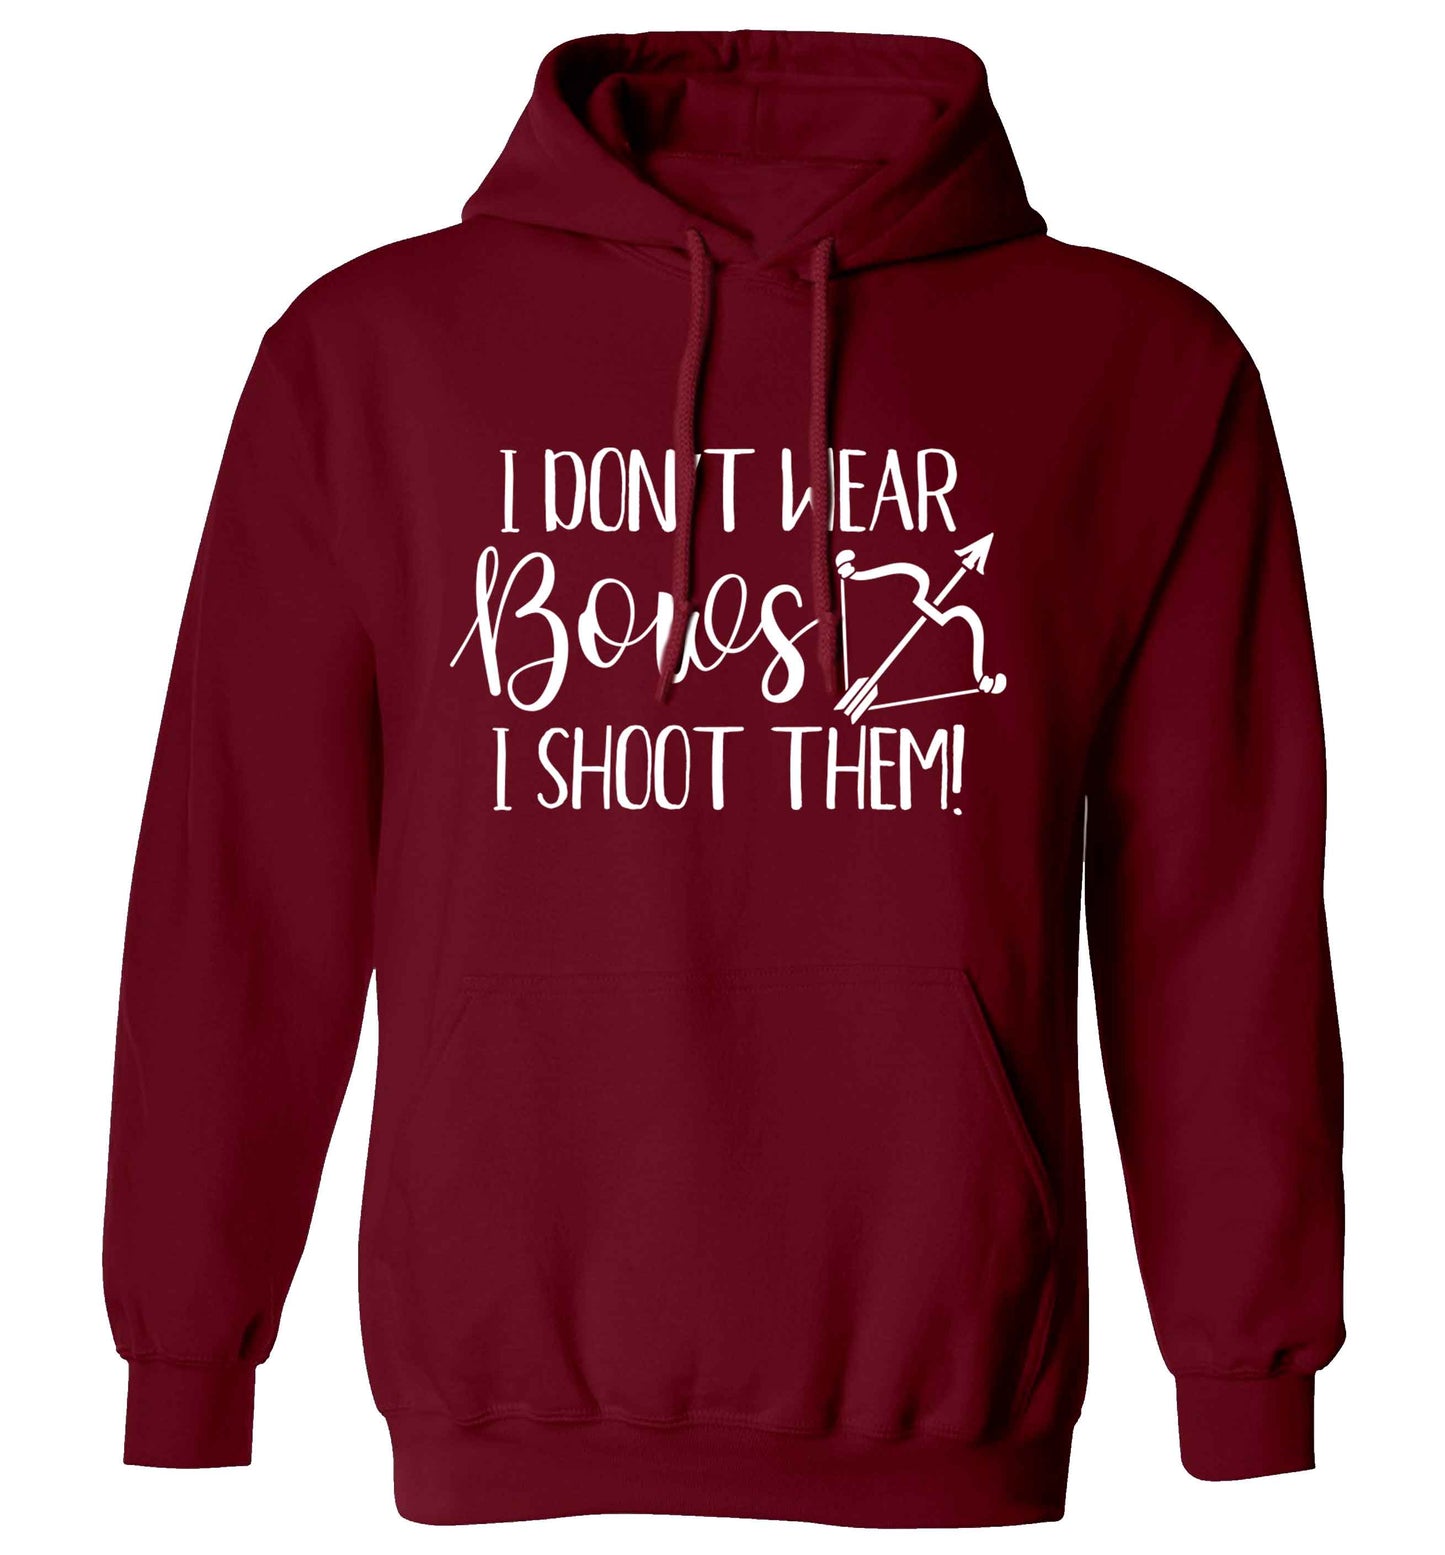 I don't wear bows I shoot them adults unisex maroon hoodie 2XL